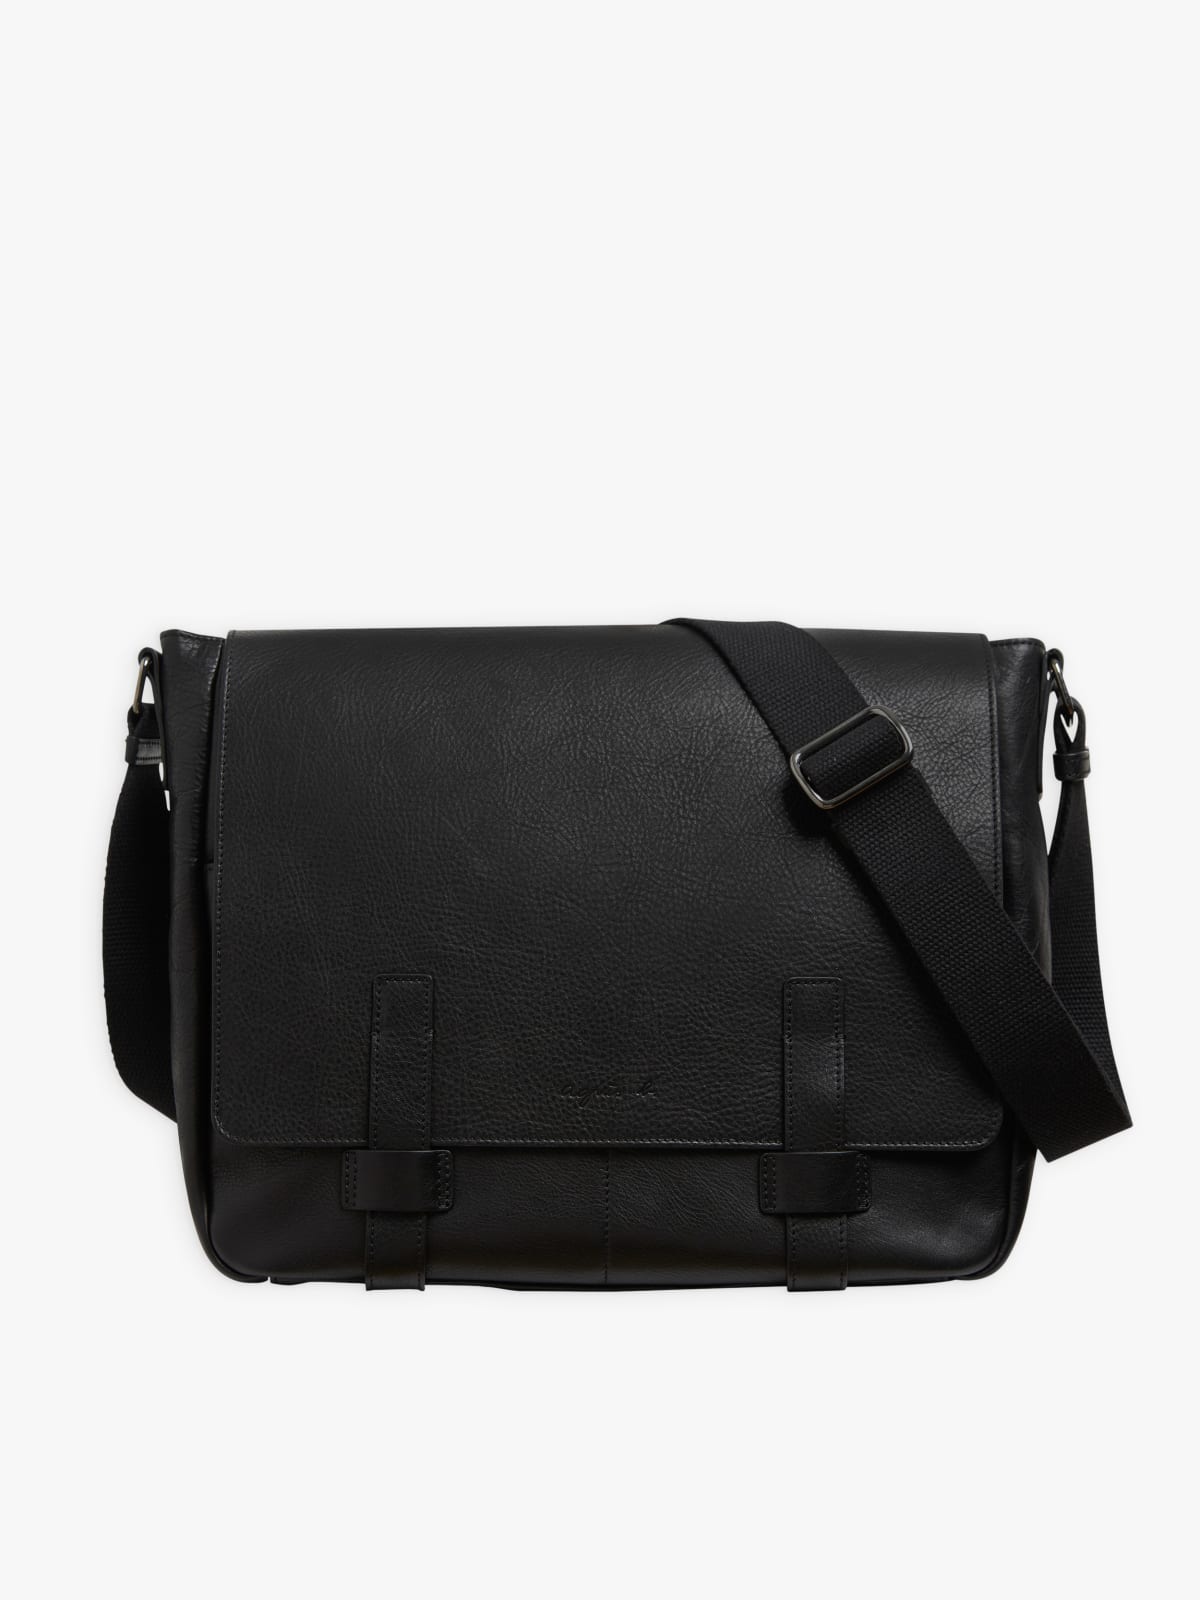 black leather Joshua handbag